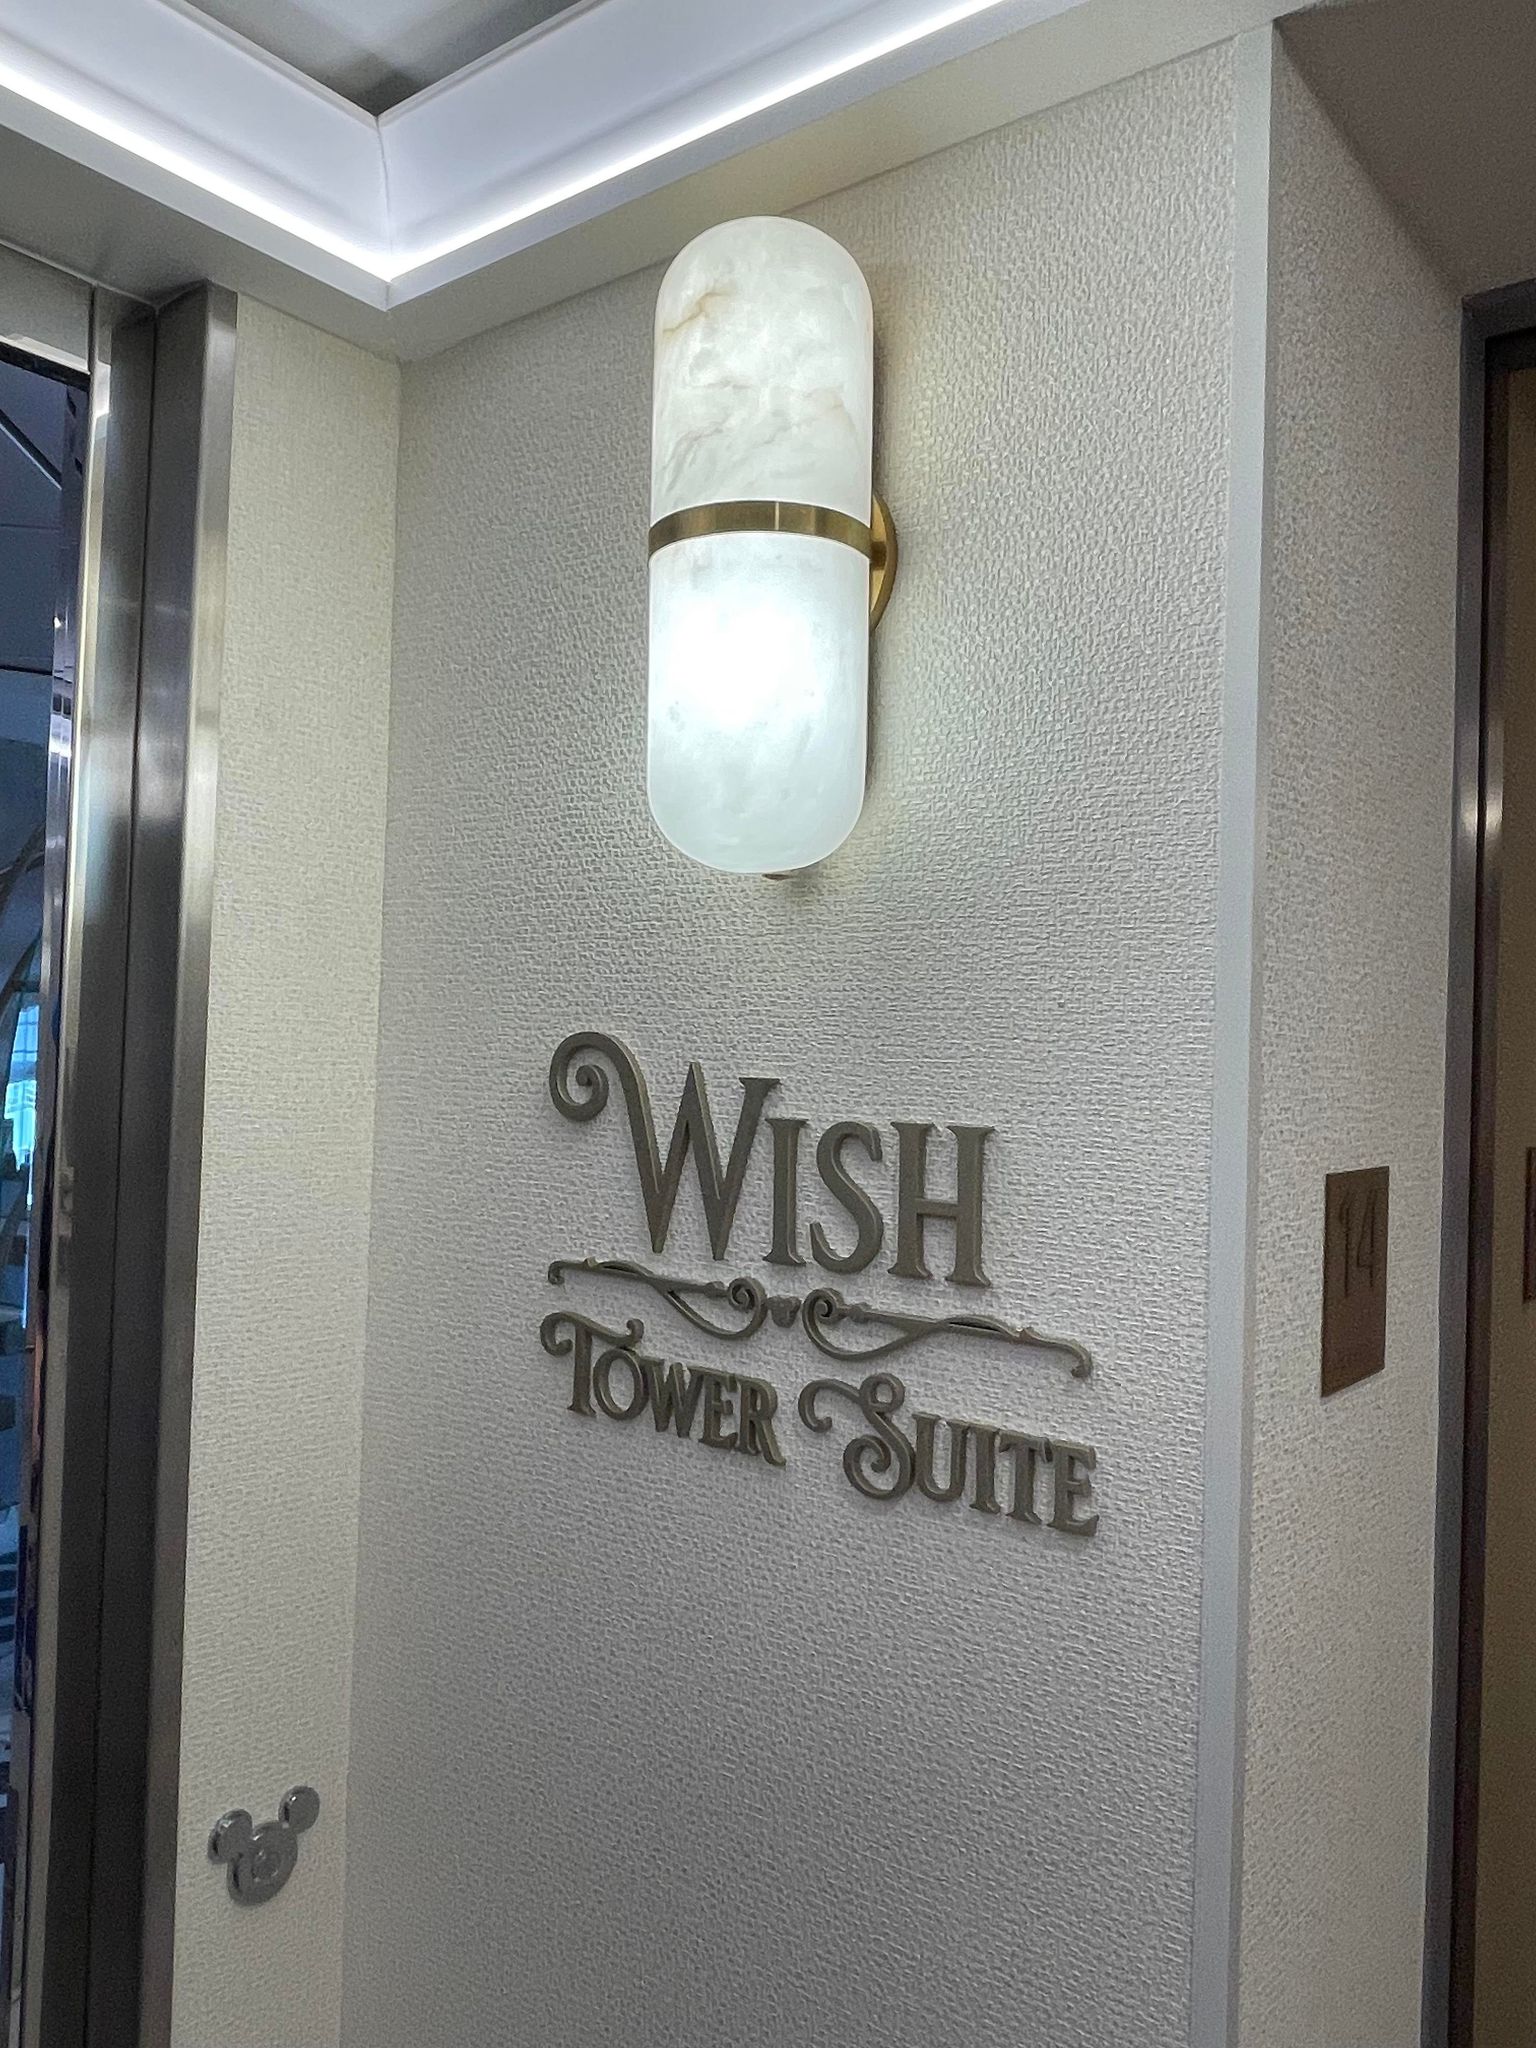 Disney Wish Tower Suite